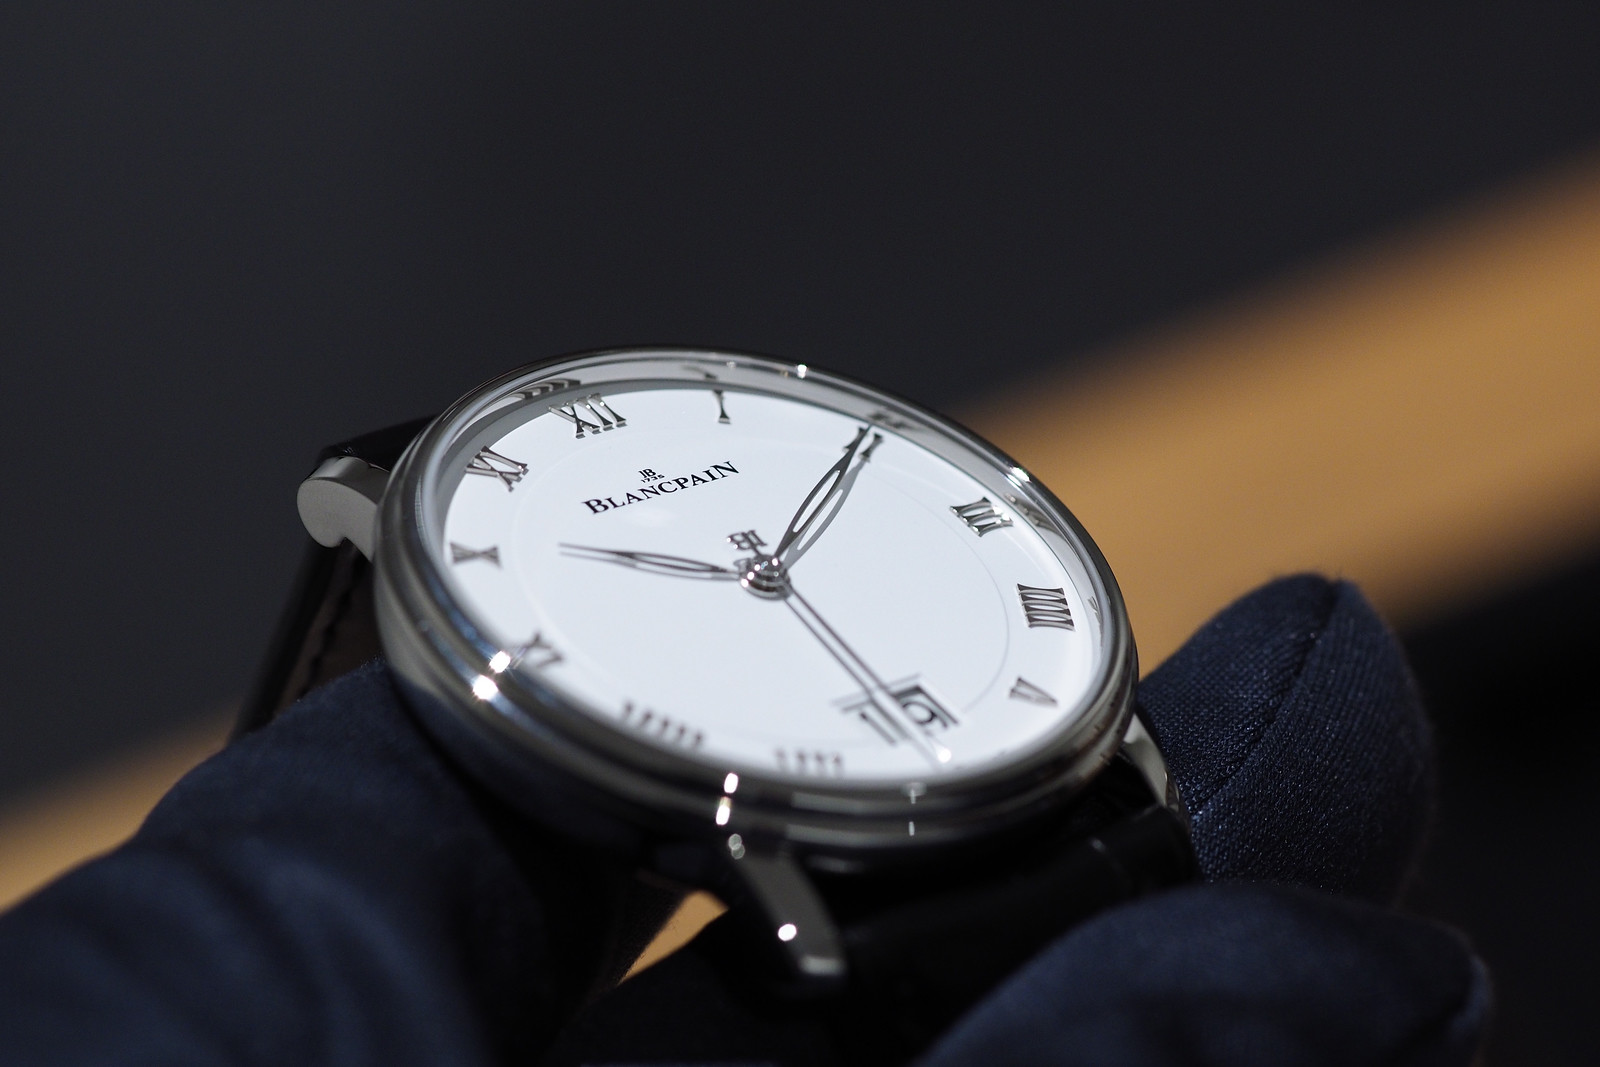 Сайты производителя часов. Часы Blancpain Villeret. Blancpain Villeret Retrograde. Blancpain Villeret на руке. Blancpain — Villeret часы Quantième complet.